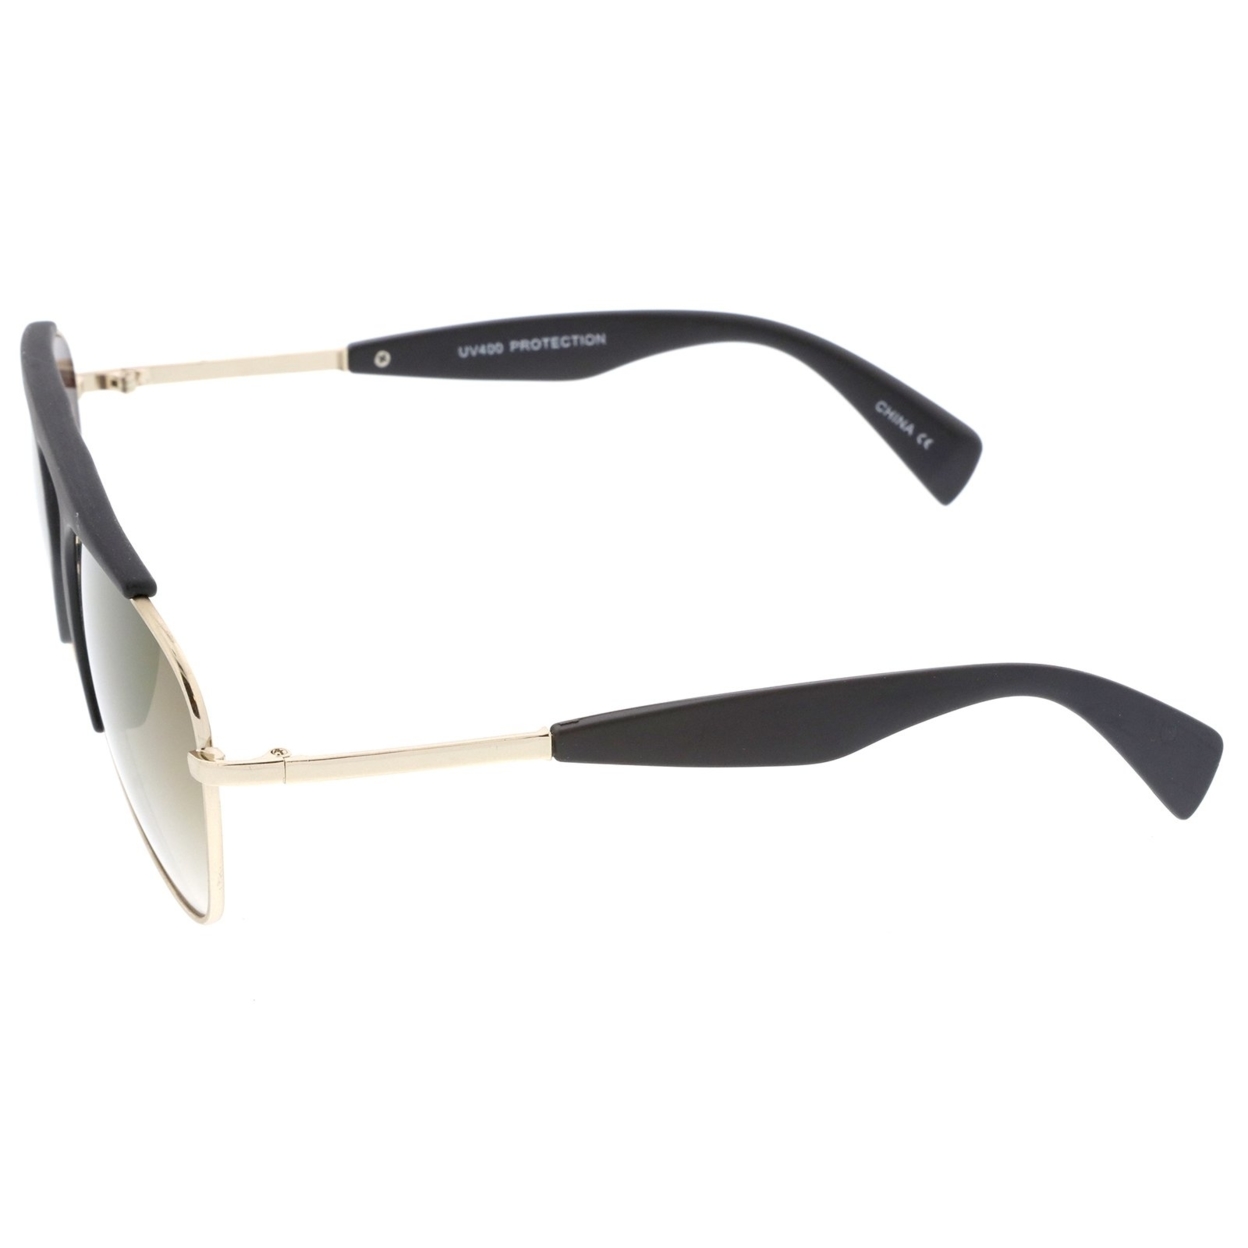 Bold Brow Bar Keyhole Nose Bridge Colored Mirror Lens Aviator Sunglasses 56mm - Matte Black-Gold / Gold Mirror